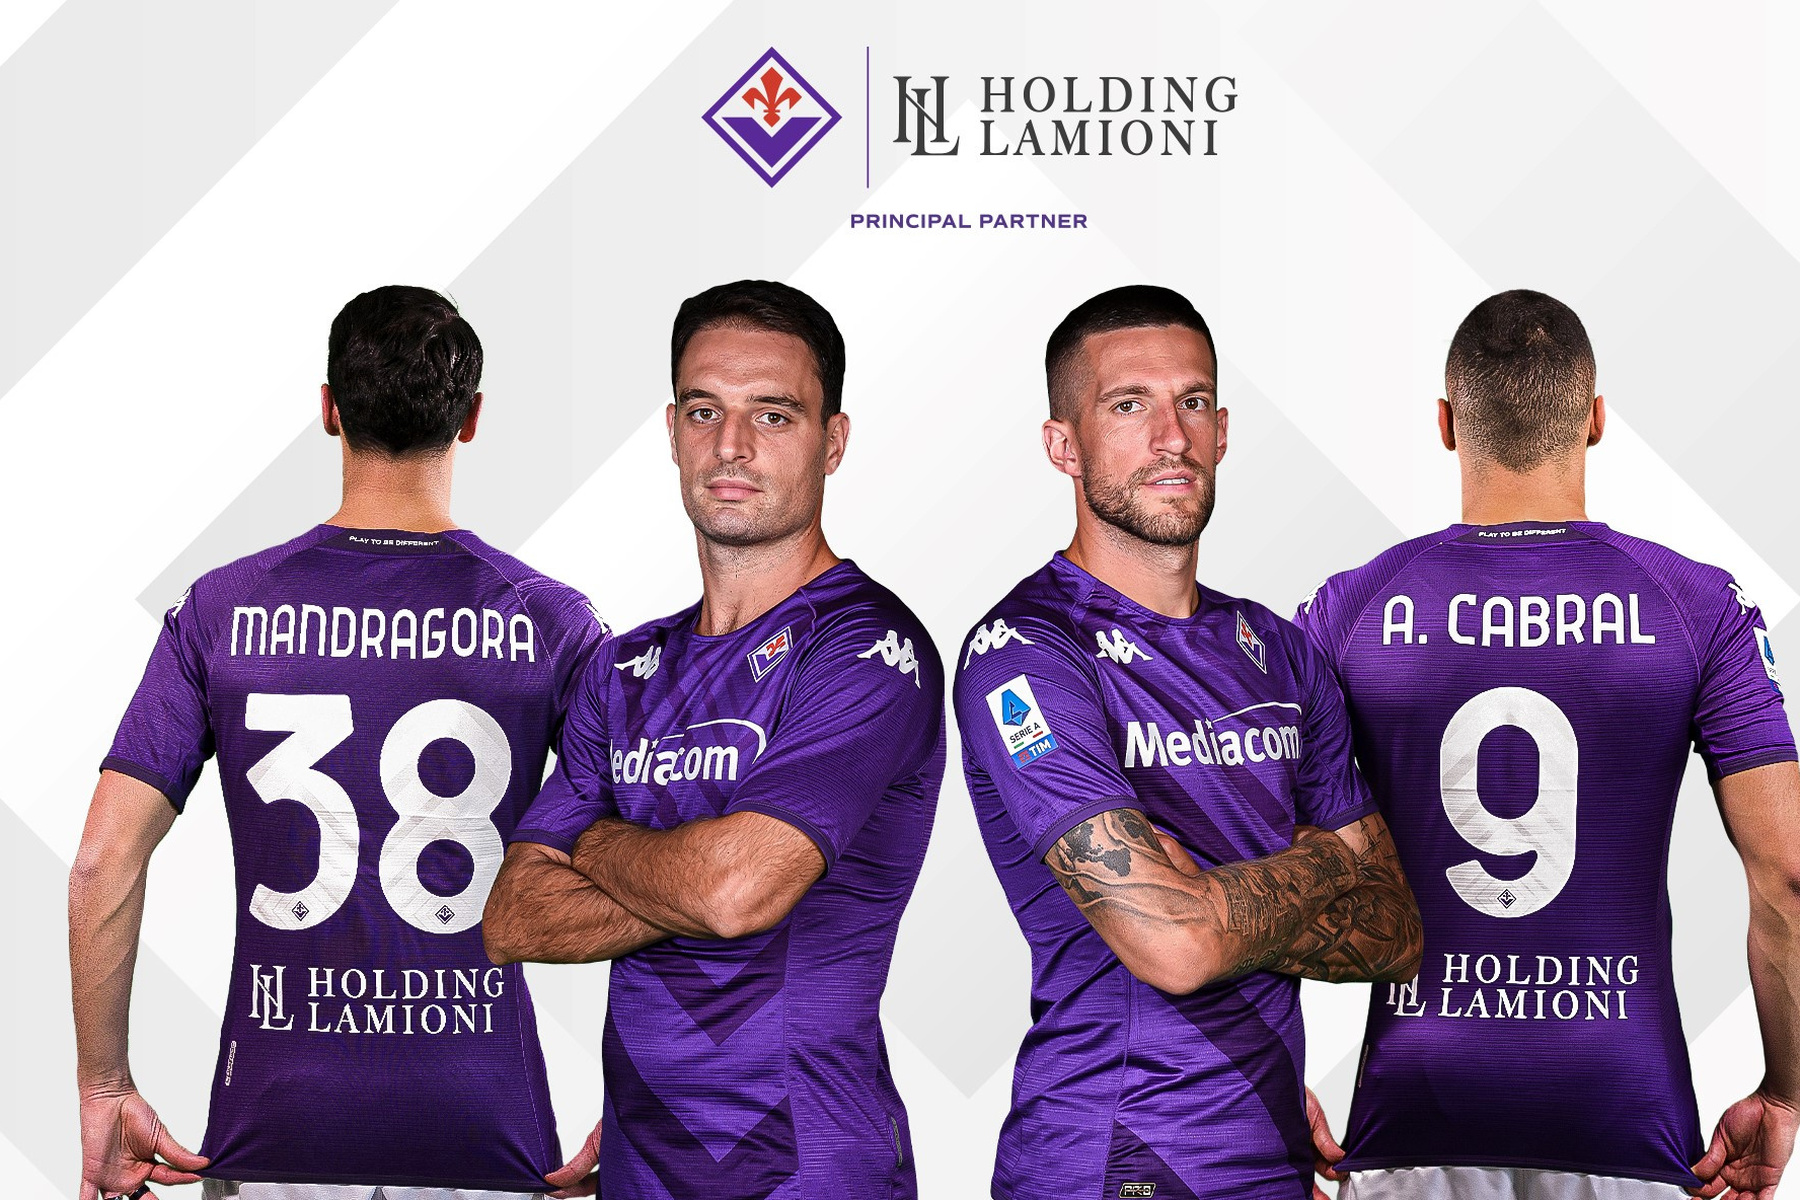 ACF Fiorentina Tickets